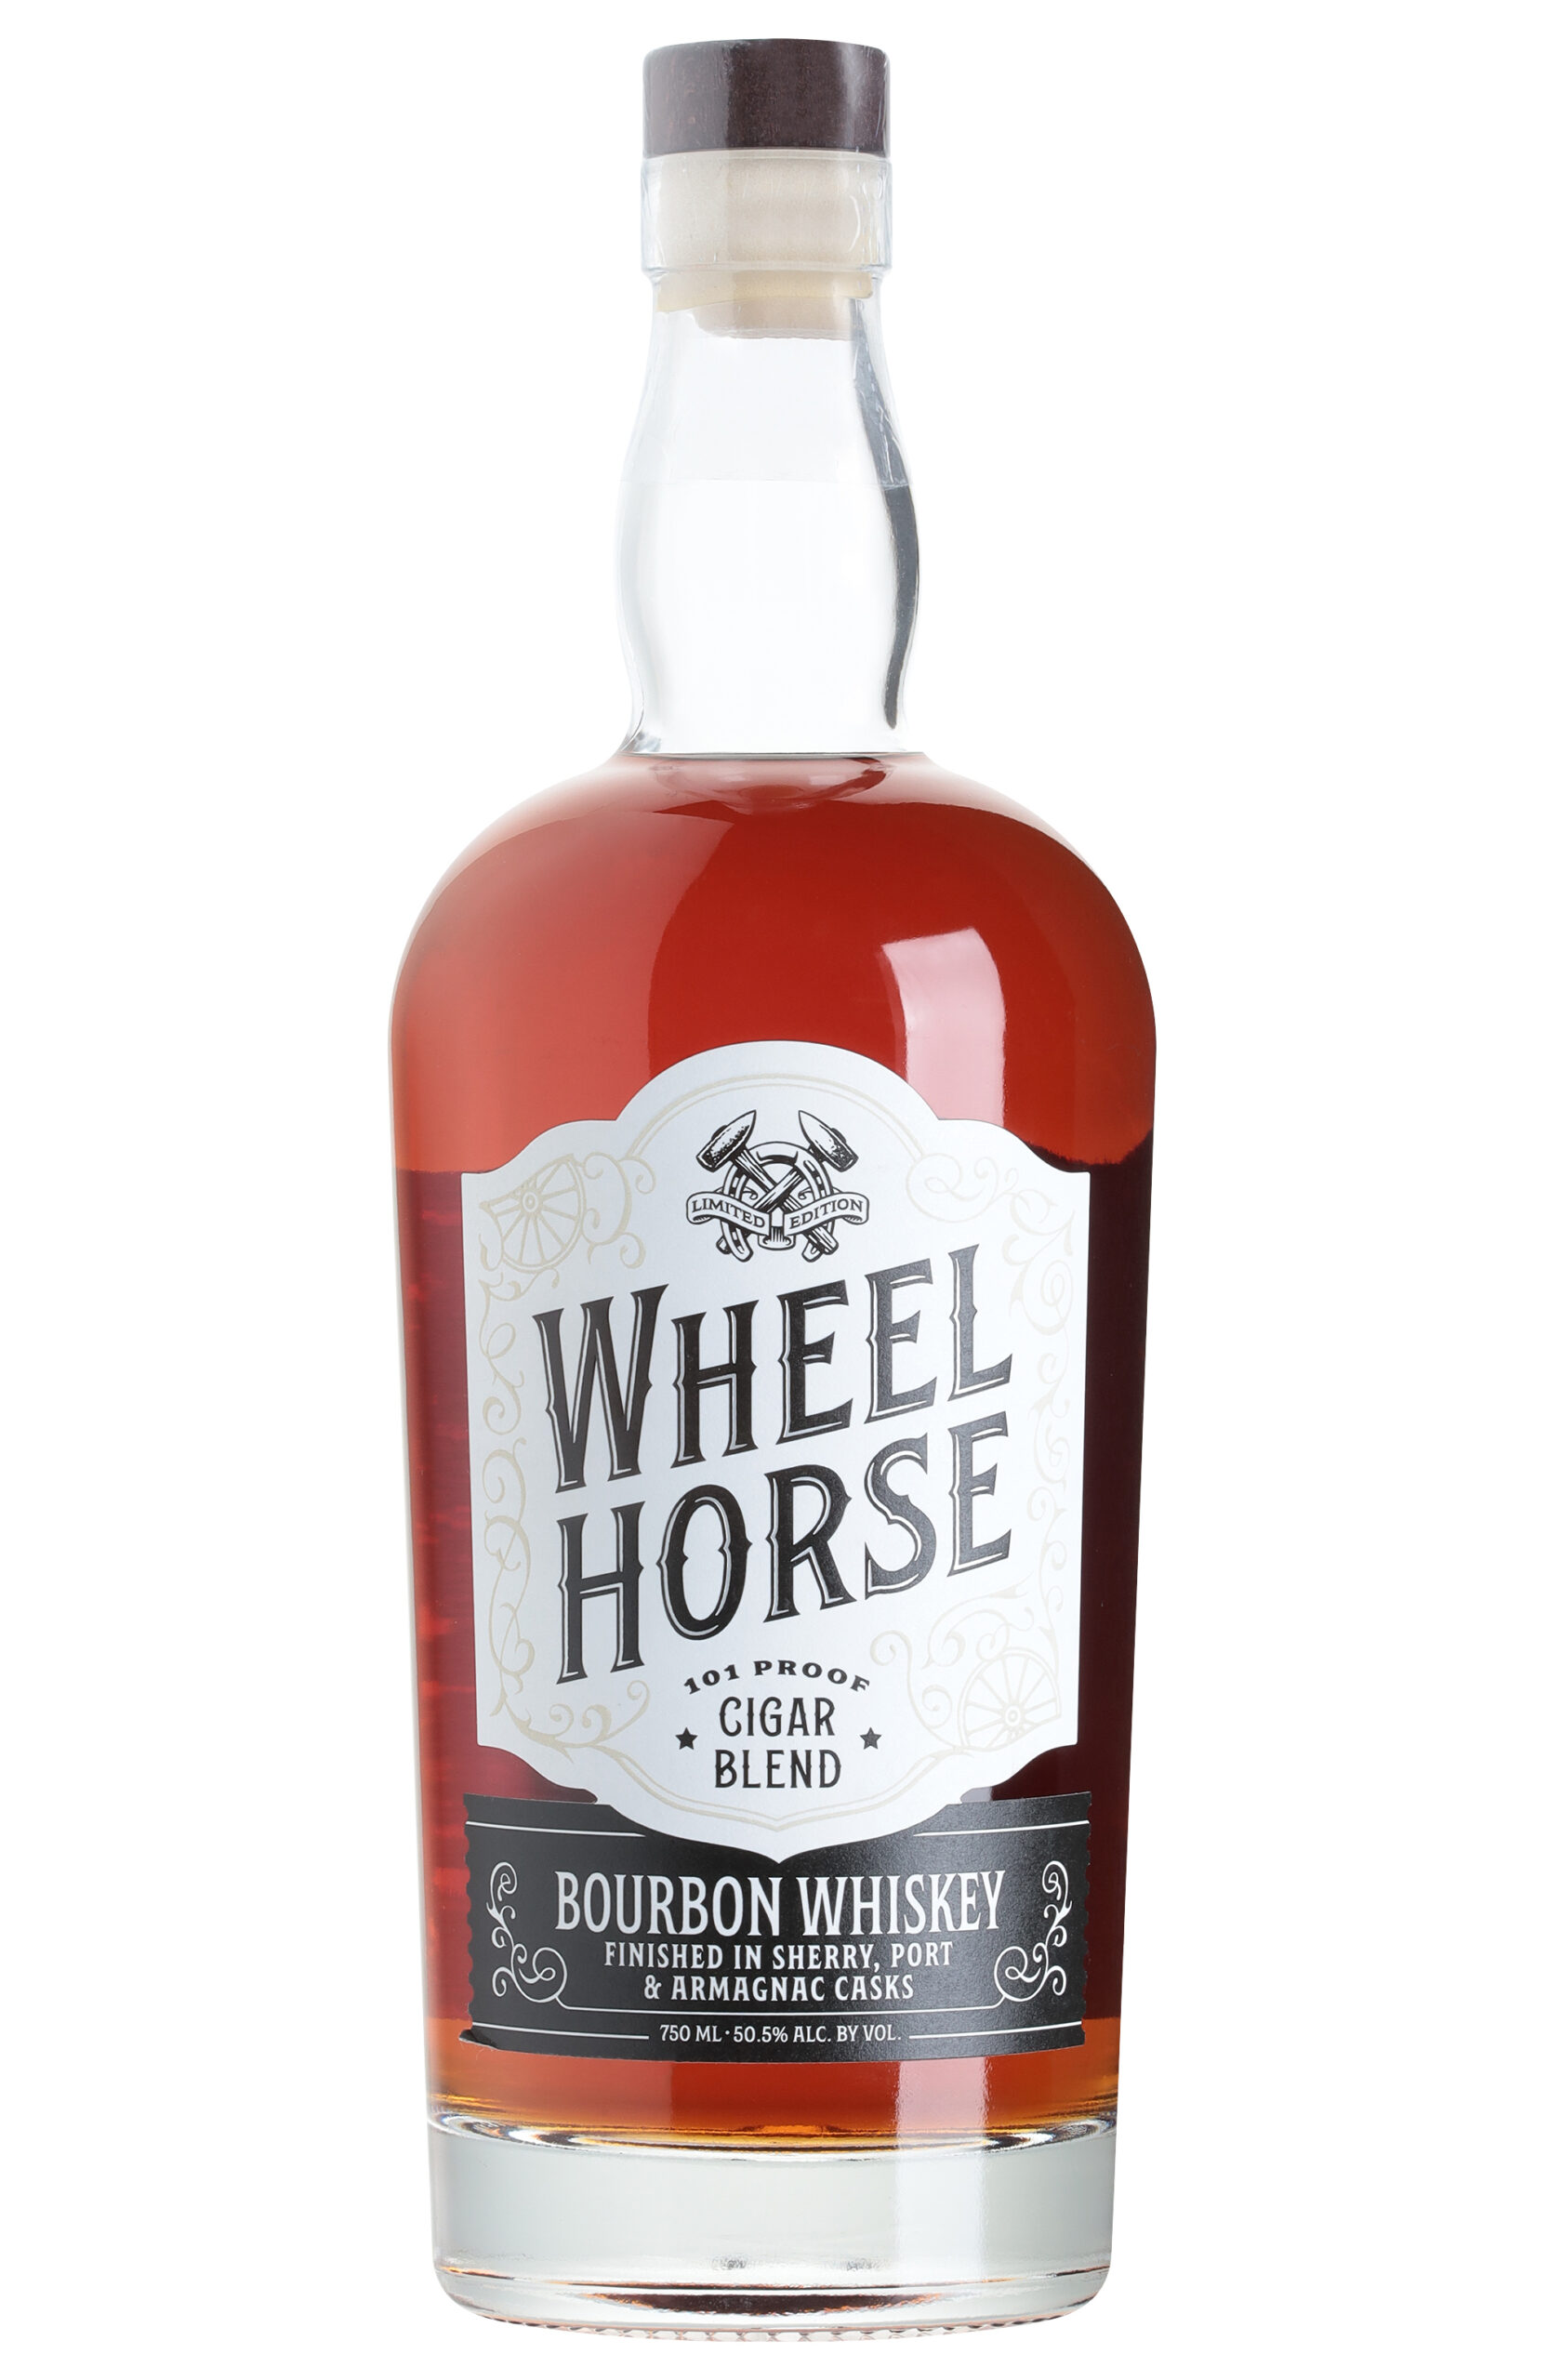 Introducing Wheel Horse Whiskey’s New Cigar Blend Bourbon